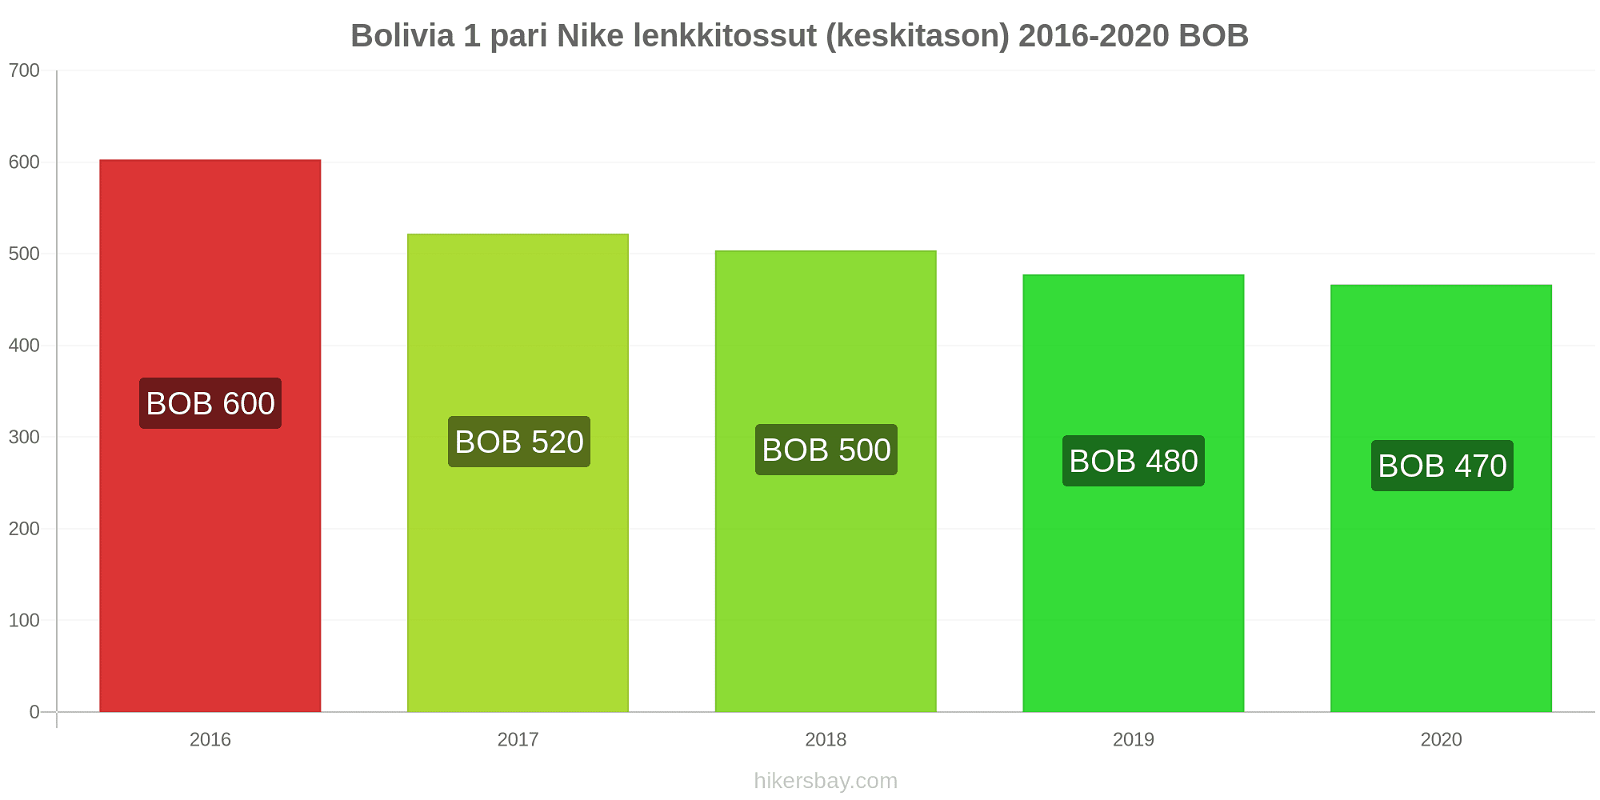 Bolivia hintojen muutokset 1 pari Nike lenkkitossut (keskitason) hikersbay.com